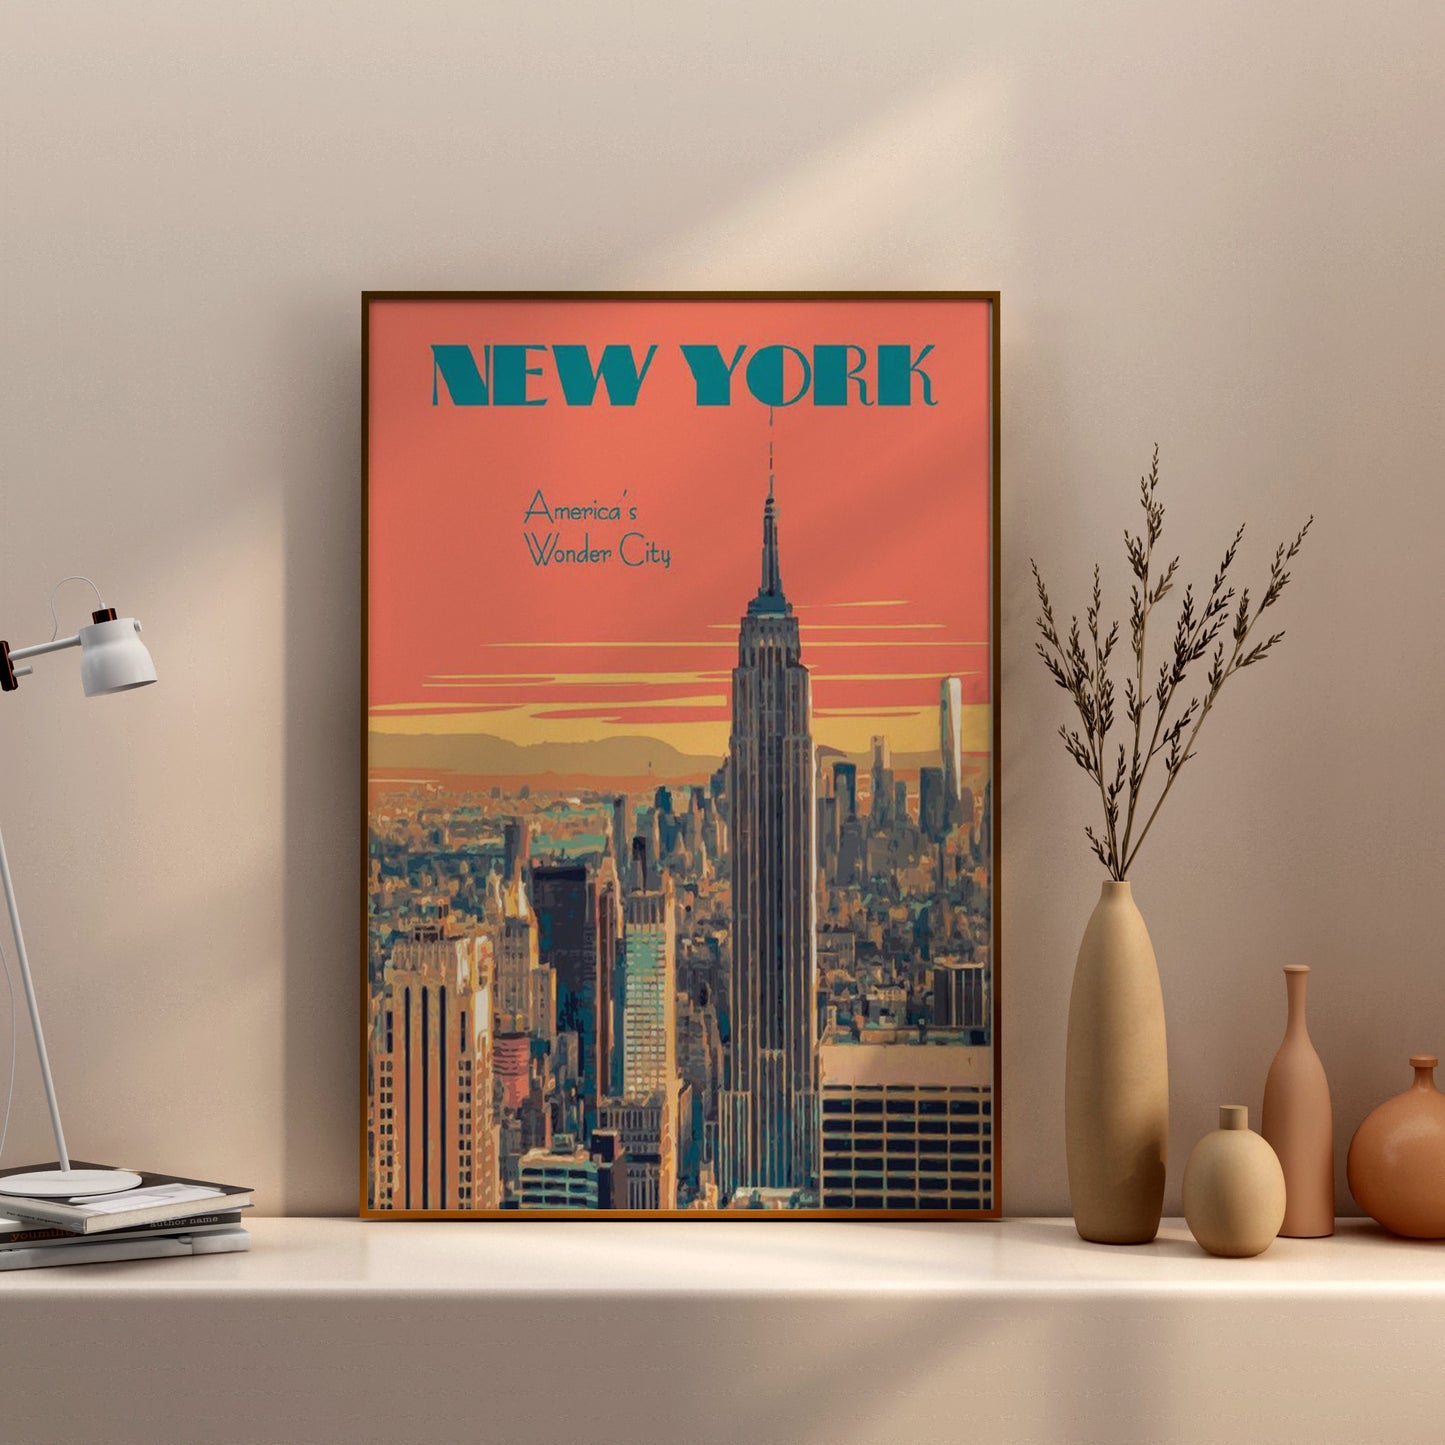 New York America's Wonder City---